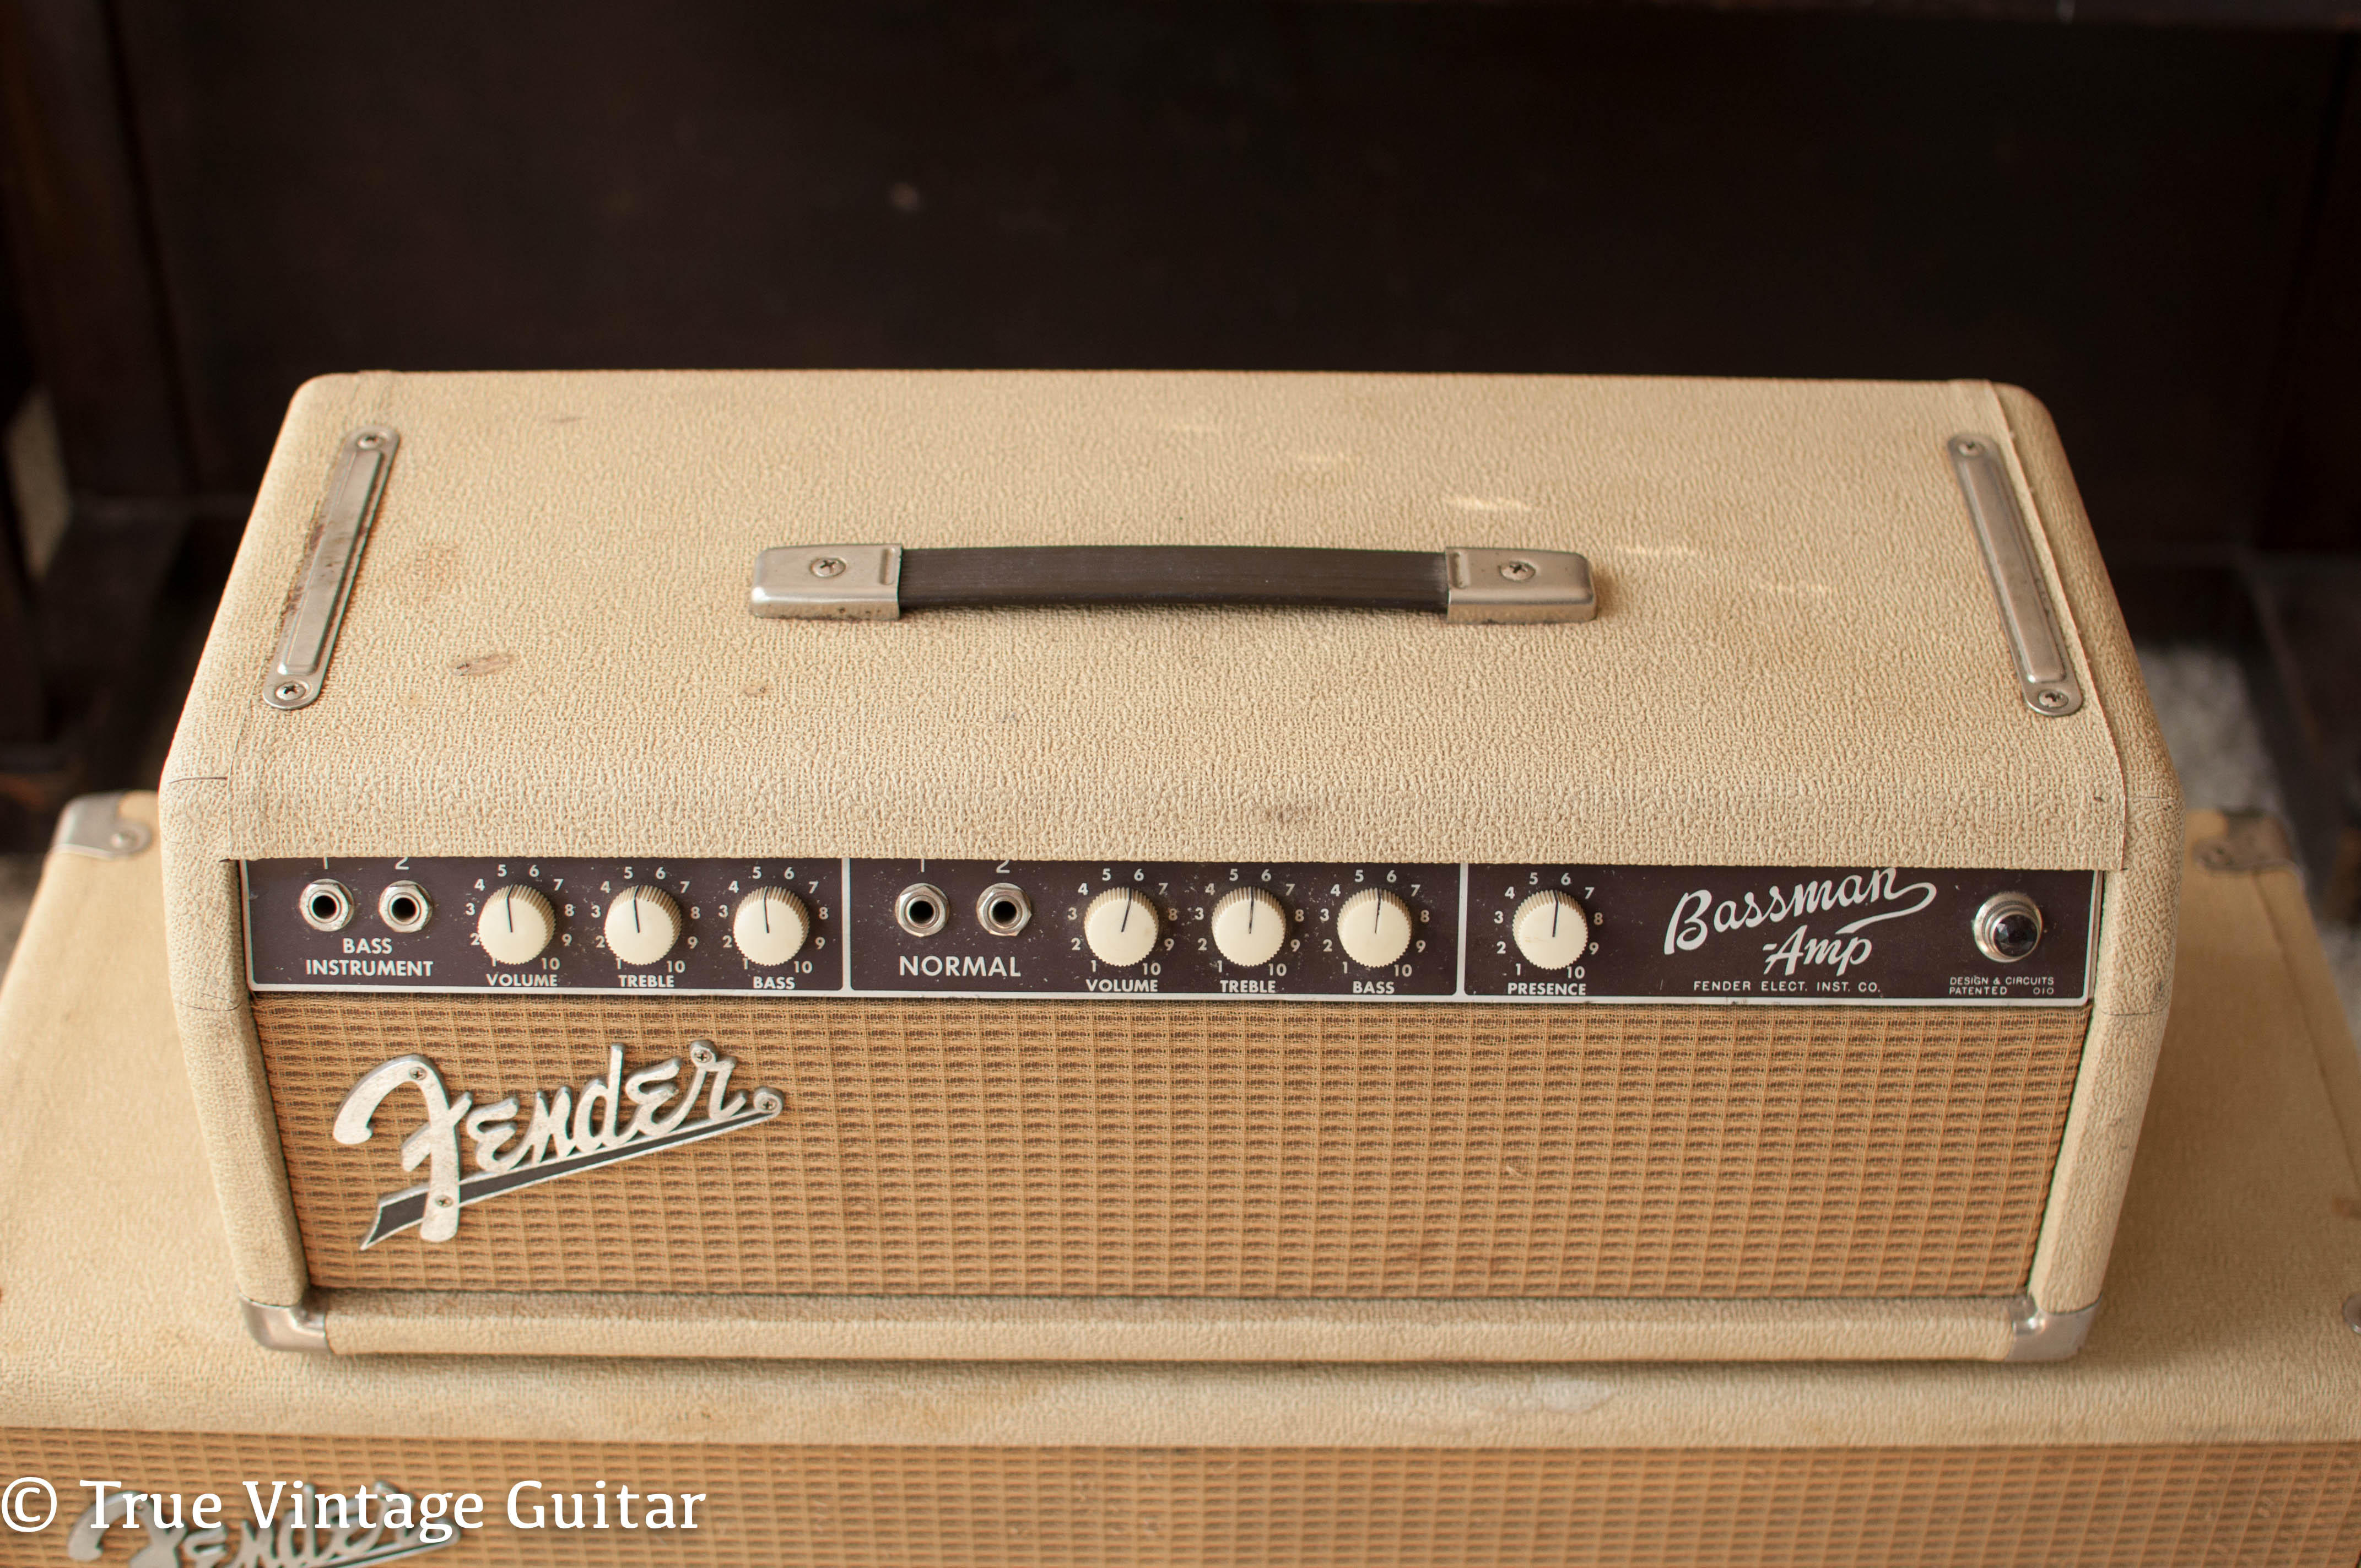 Vintage Fender Amplifier buyer